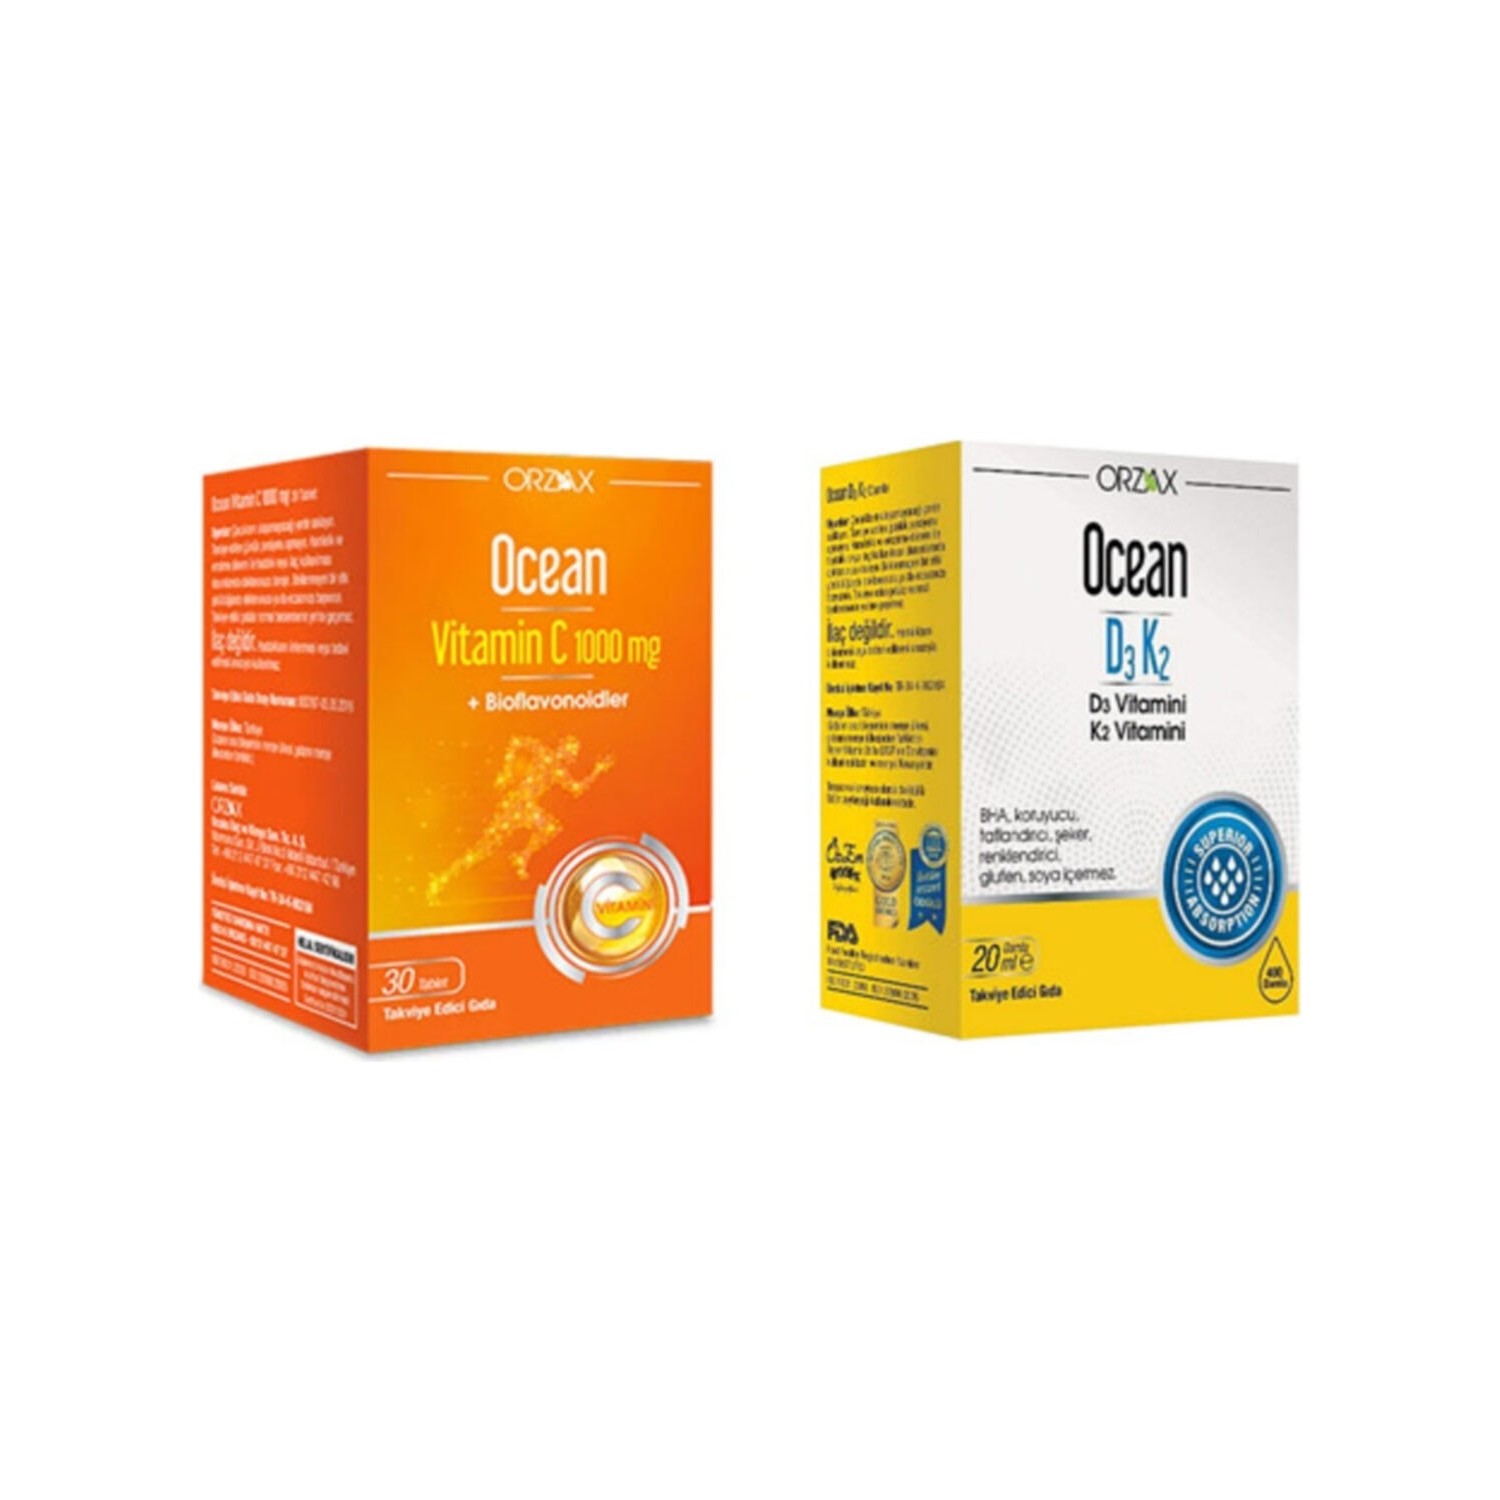 Витамин C Ocean 1000 мг, 30 таблеток + Витамины D3 / K2 Ocean ocean d3k2 20 мл капли orzax